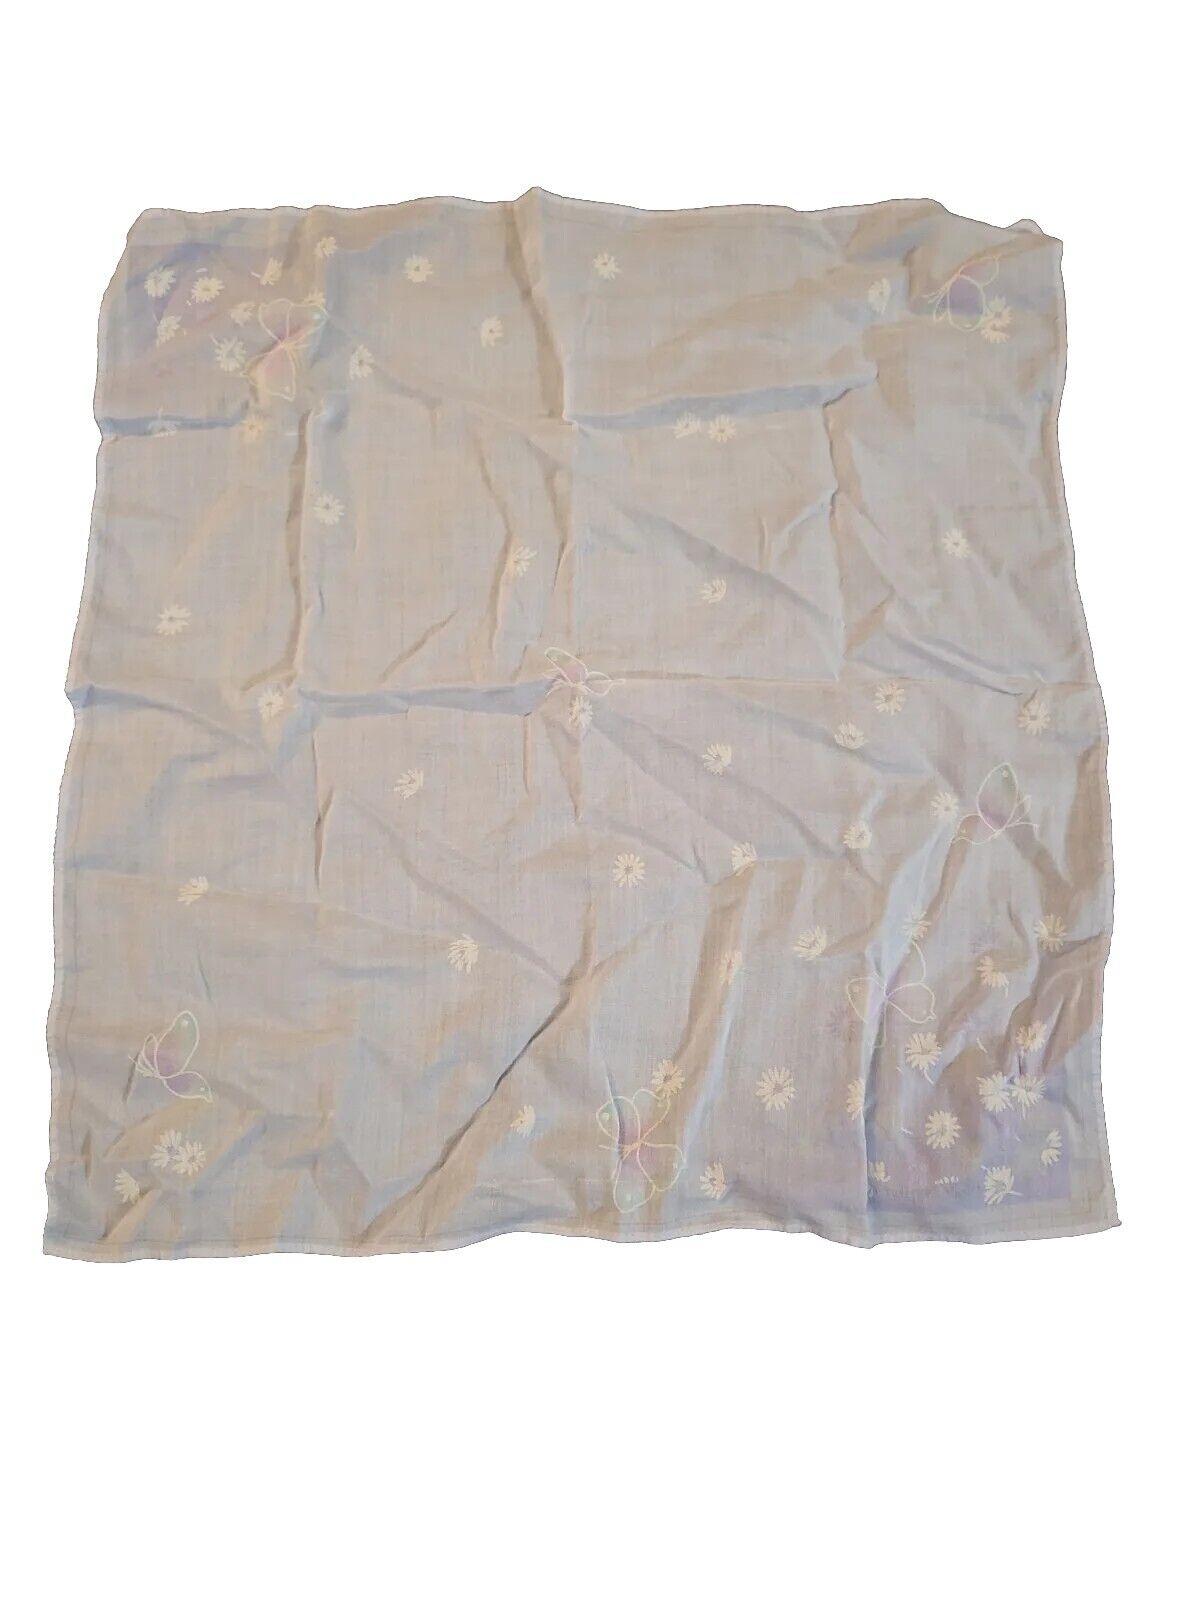 Preloved Vintage Pale Blue Butterfly Handkerchief 